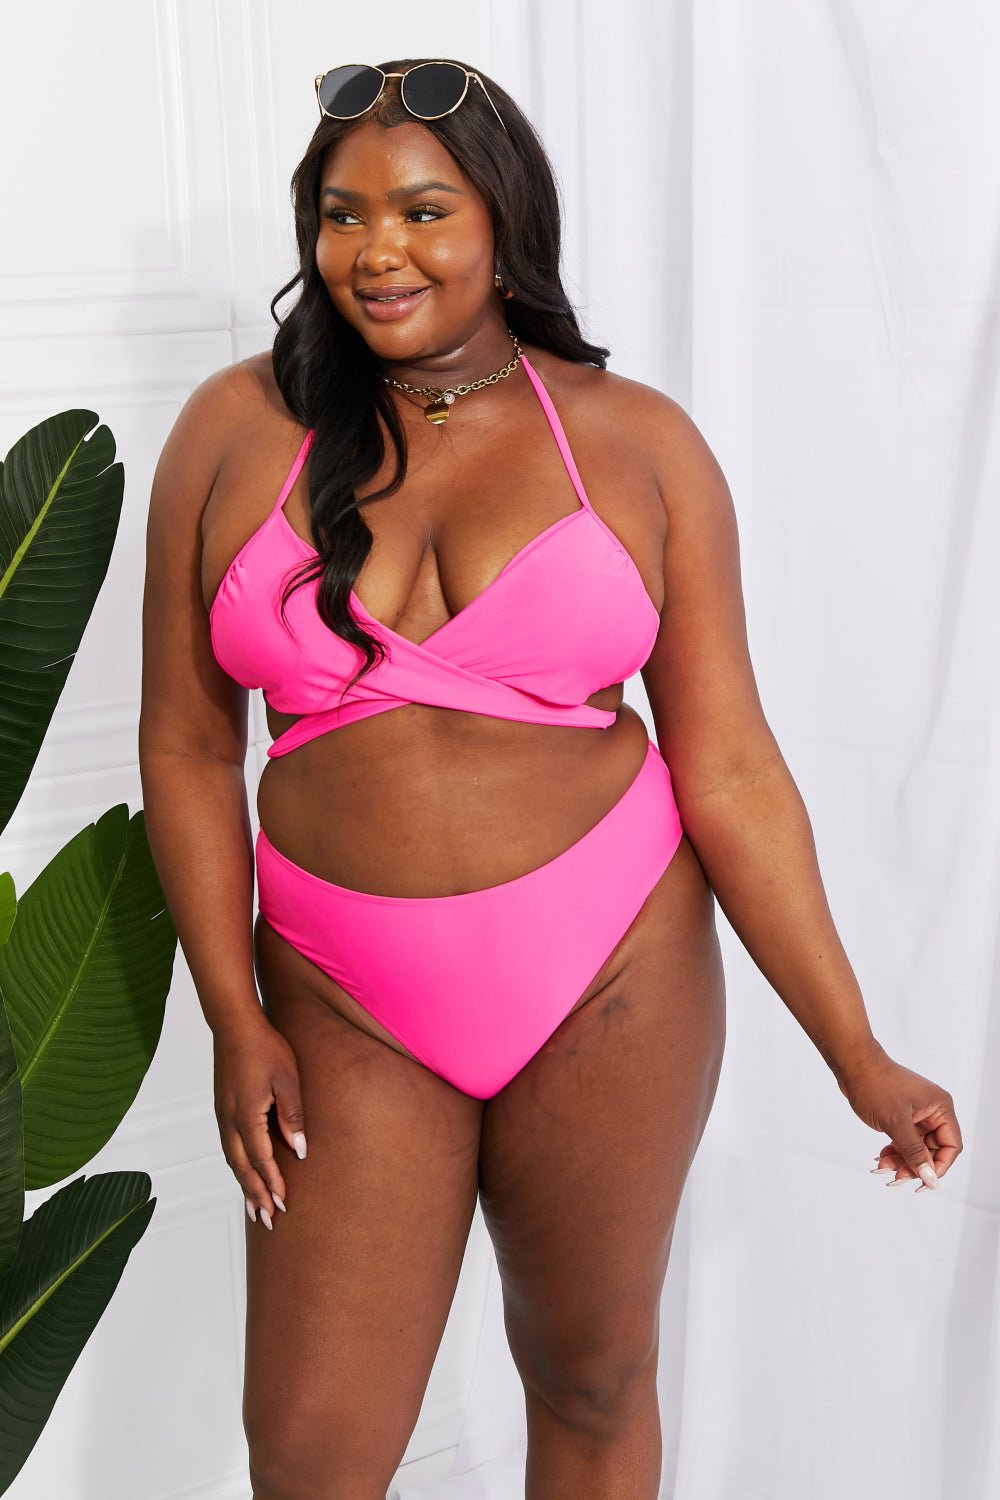 Marina West Swim Summer Splash Halter Bikini Set in Pink - Happily Ever Atchison Shop Co.